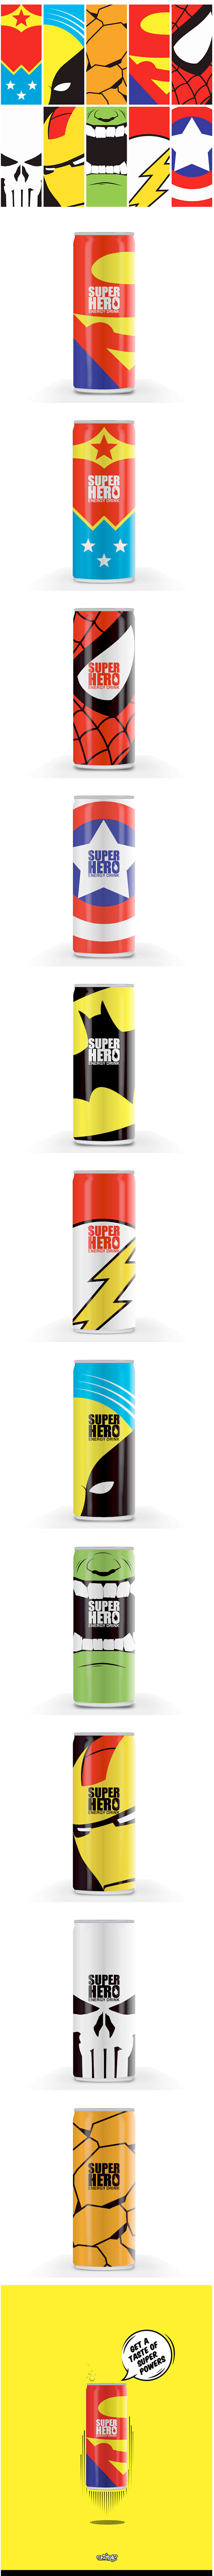 Concept: Super Hero能...